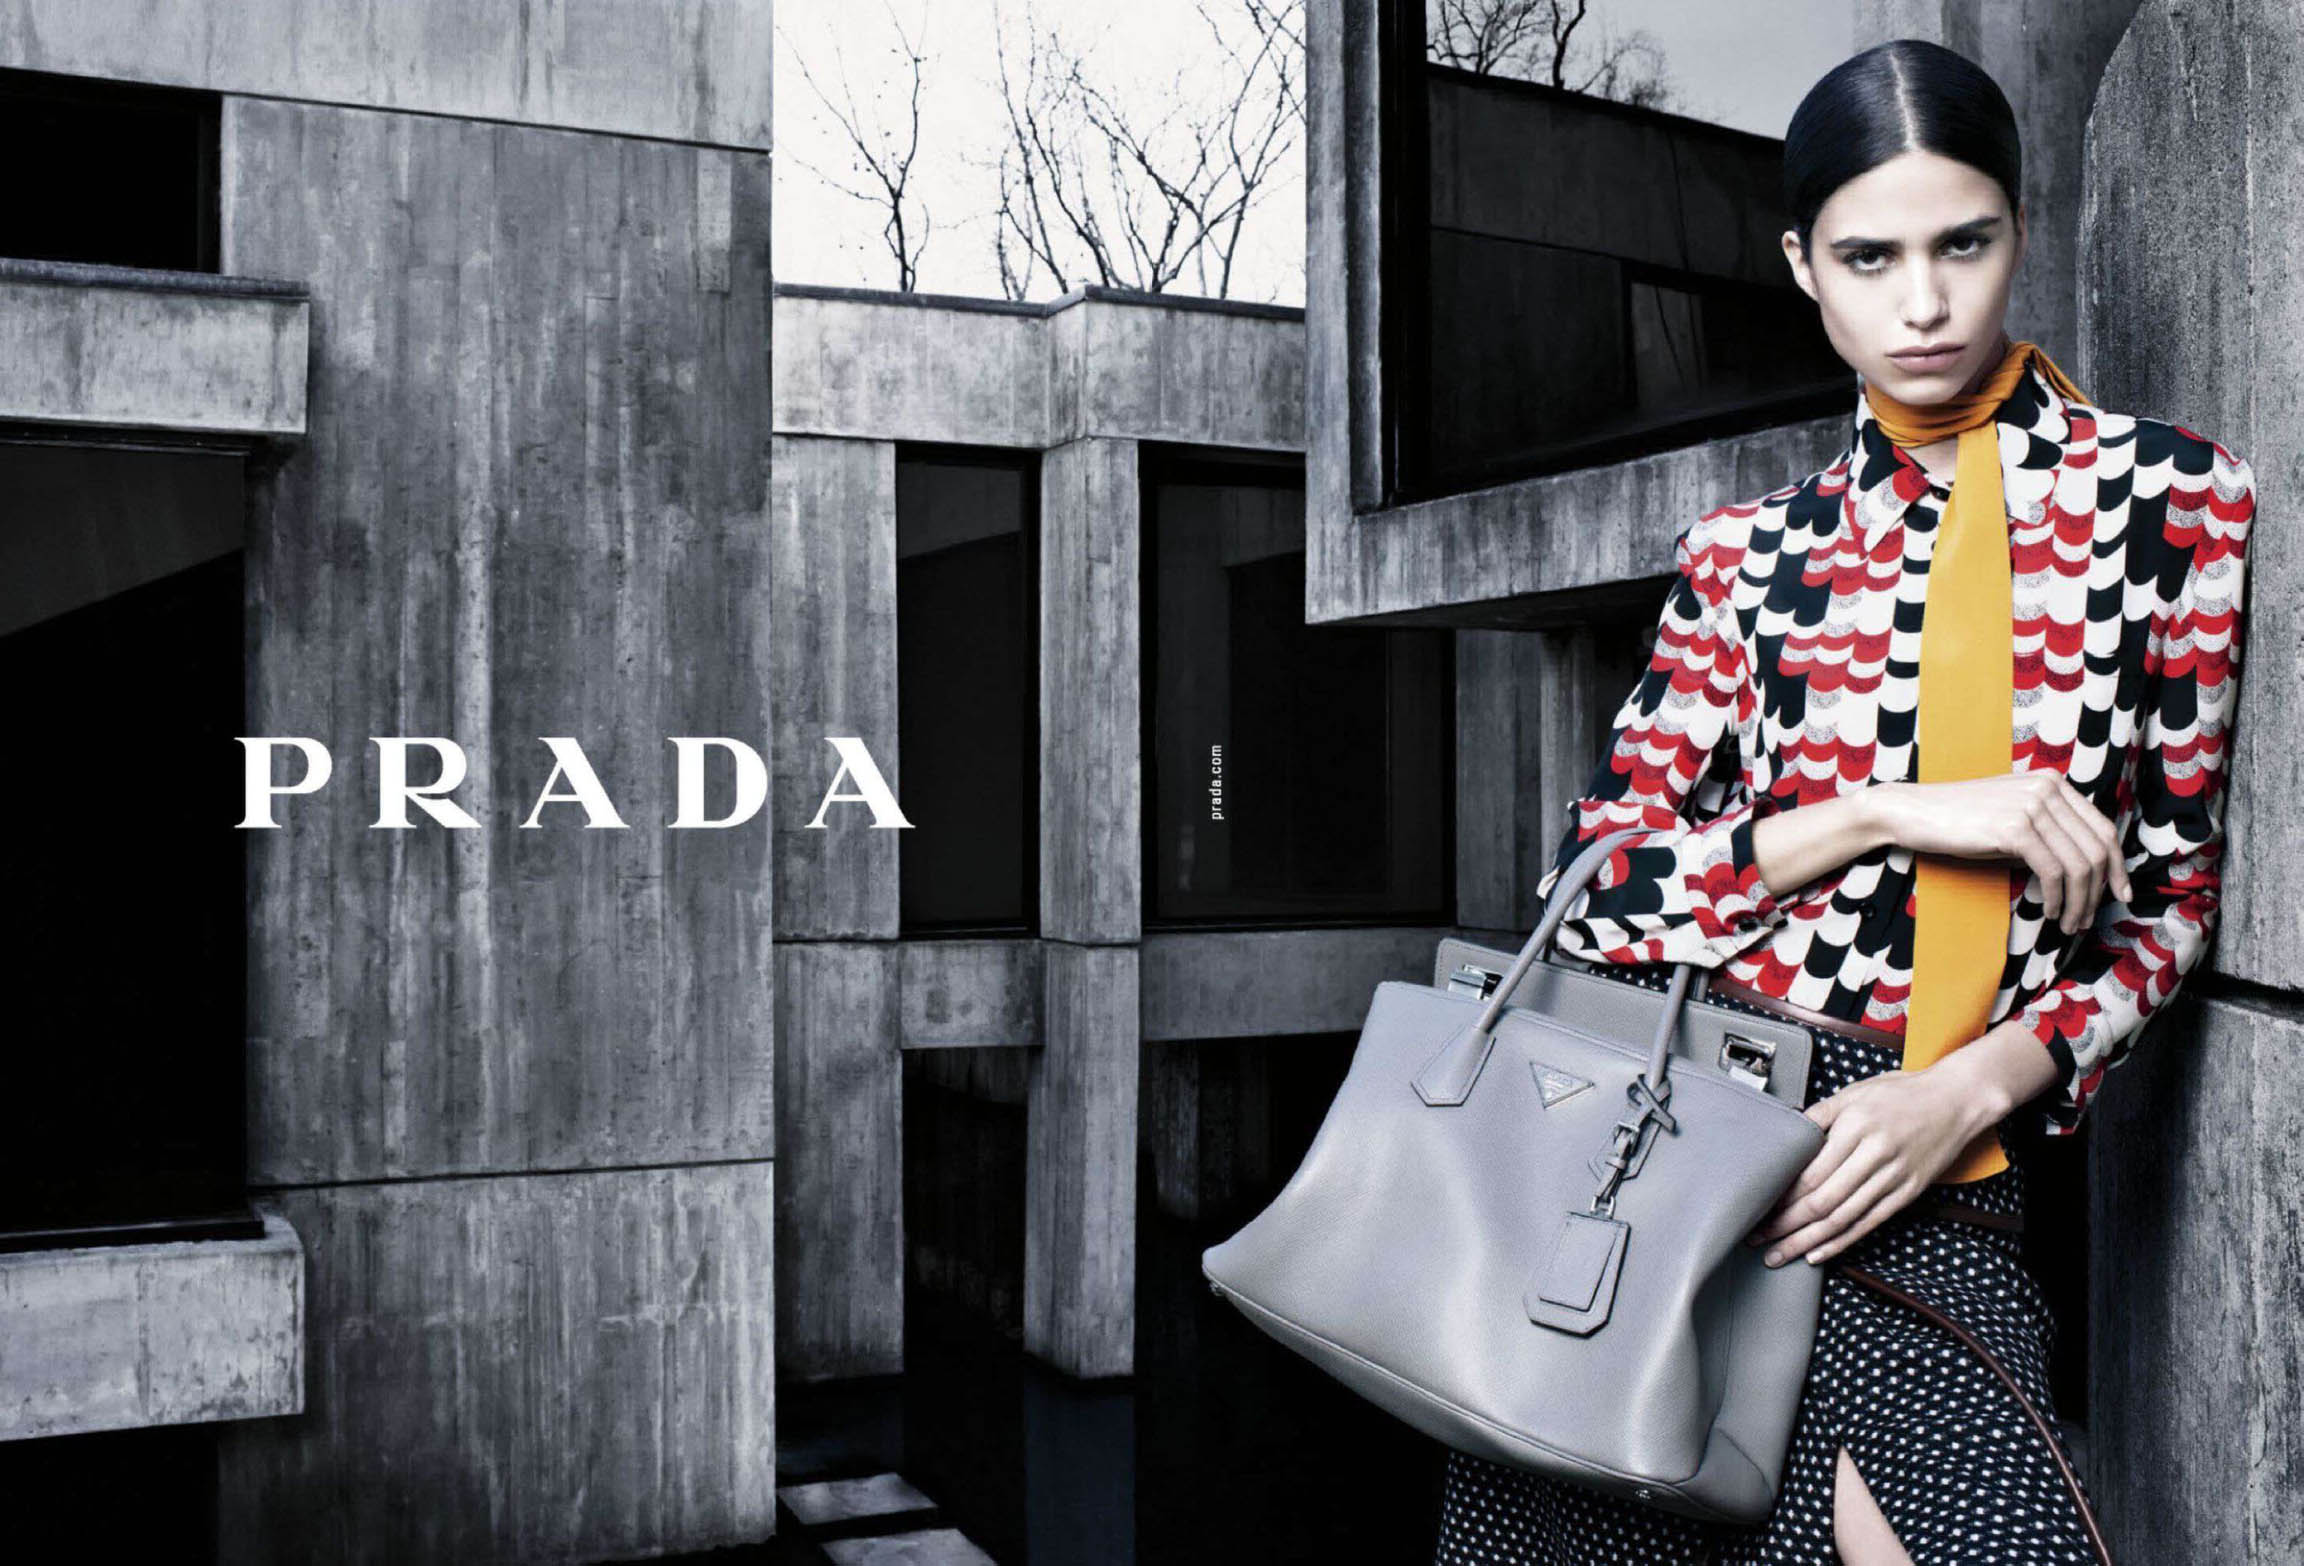 Prada Fashion Advertising Archive | The Impression